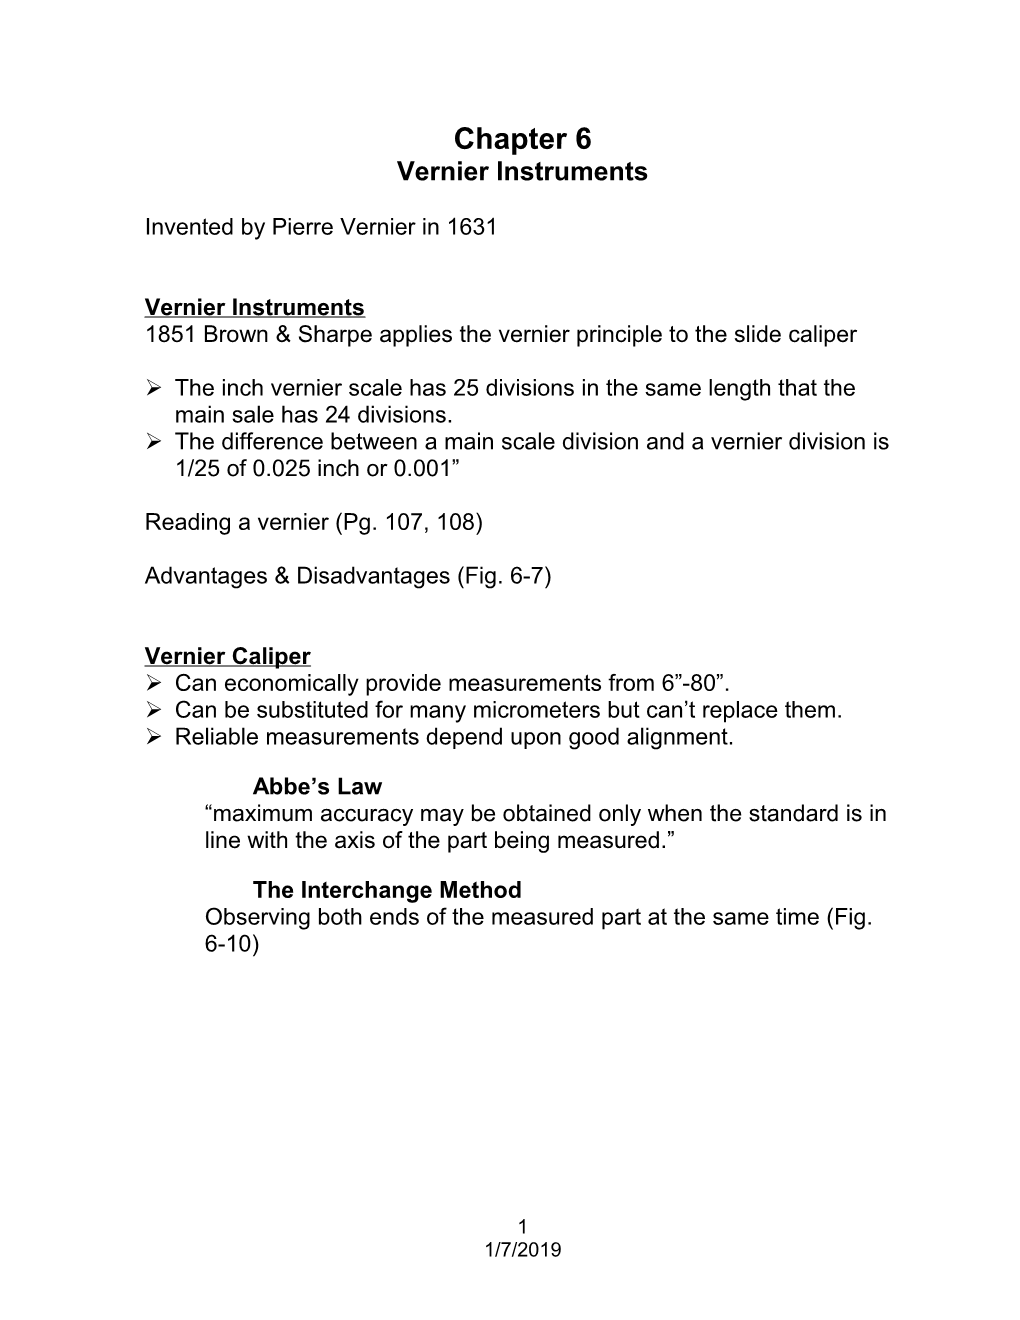 Vernier Instruments